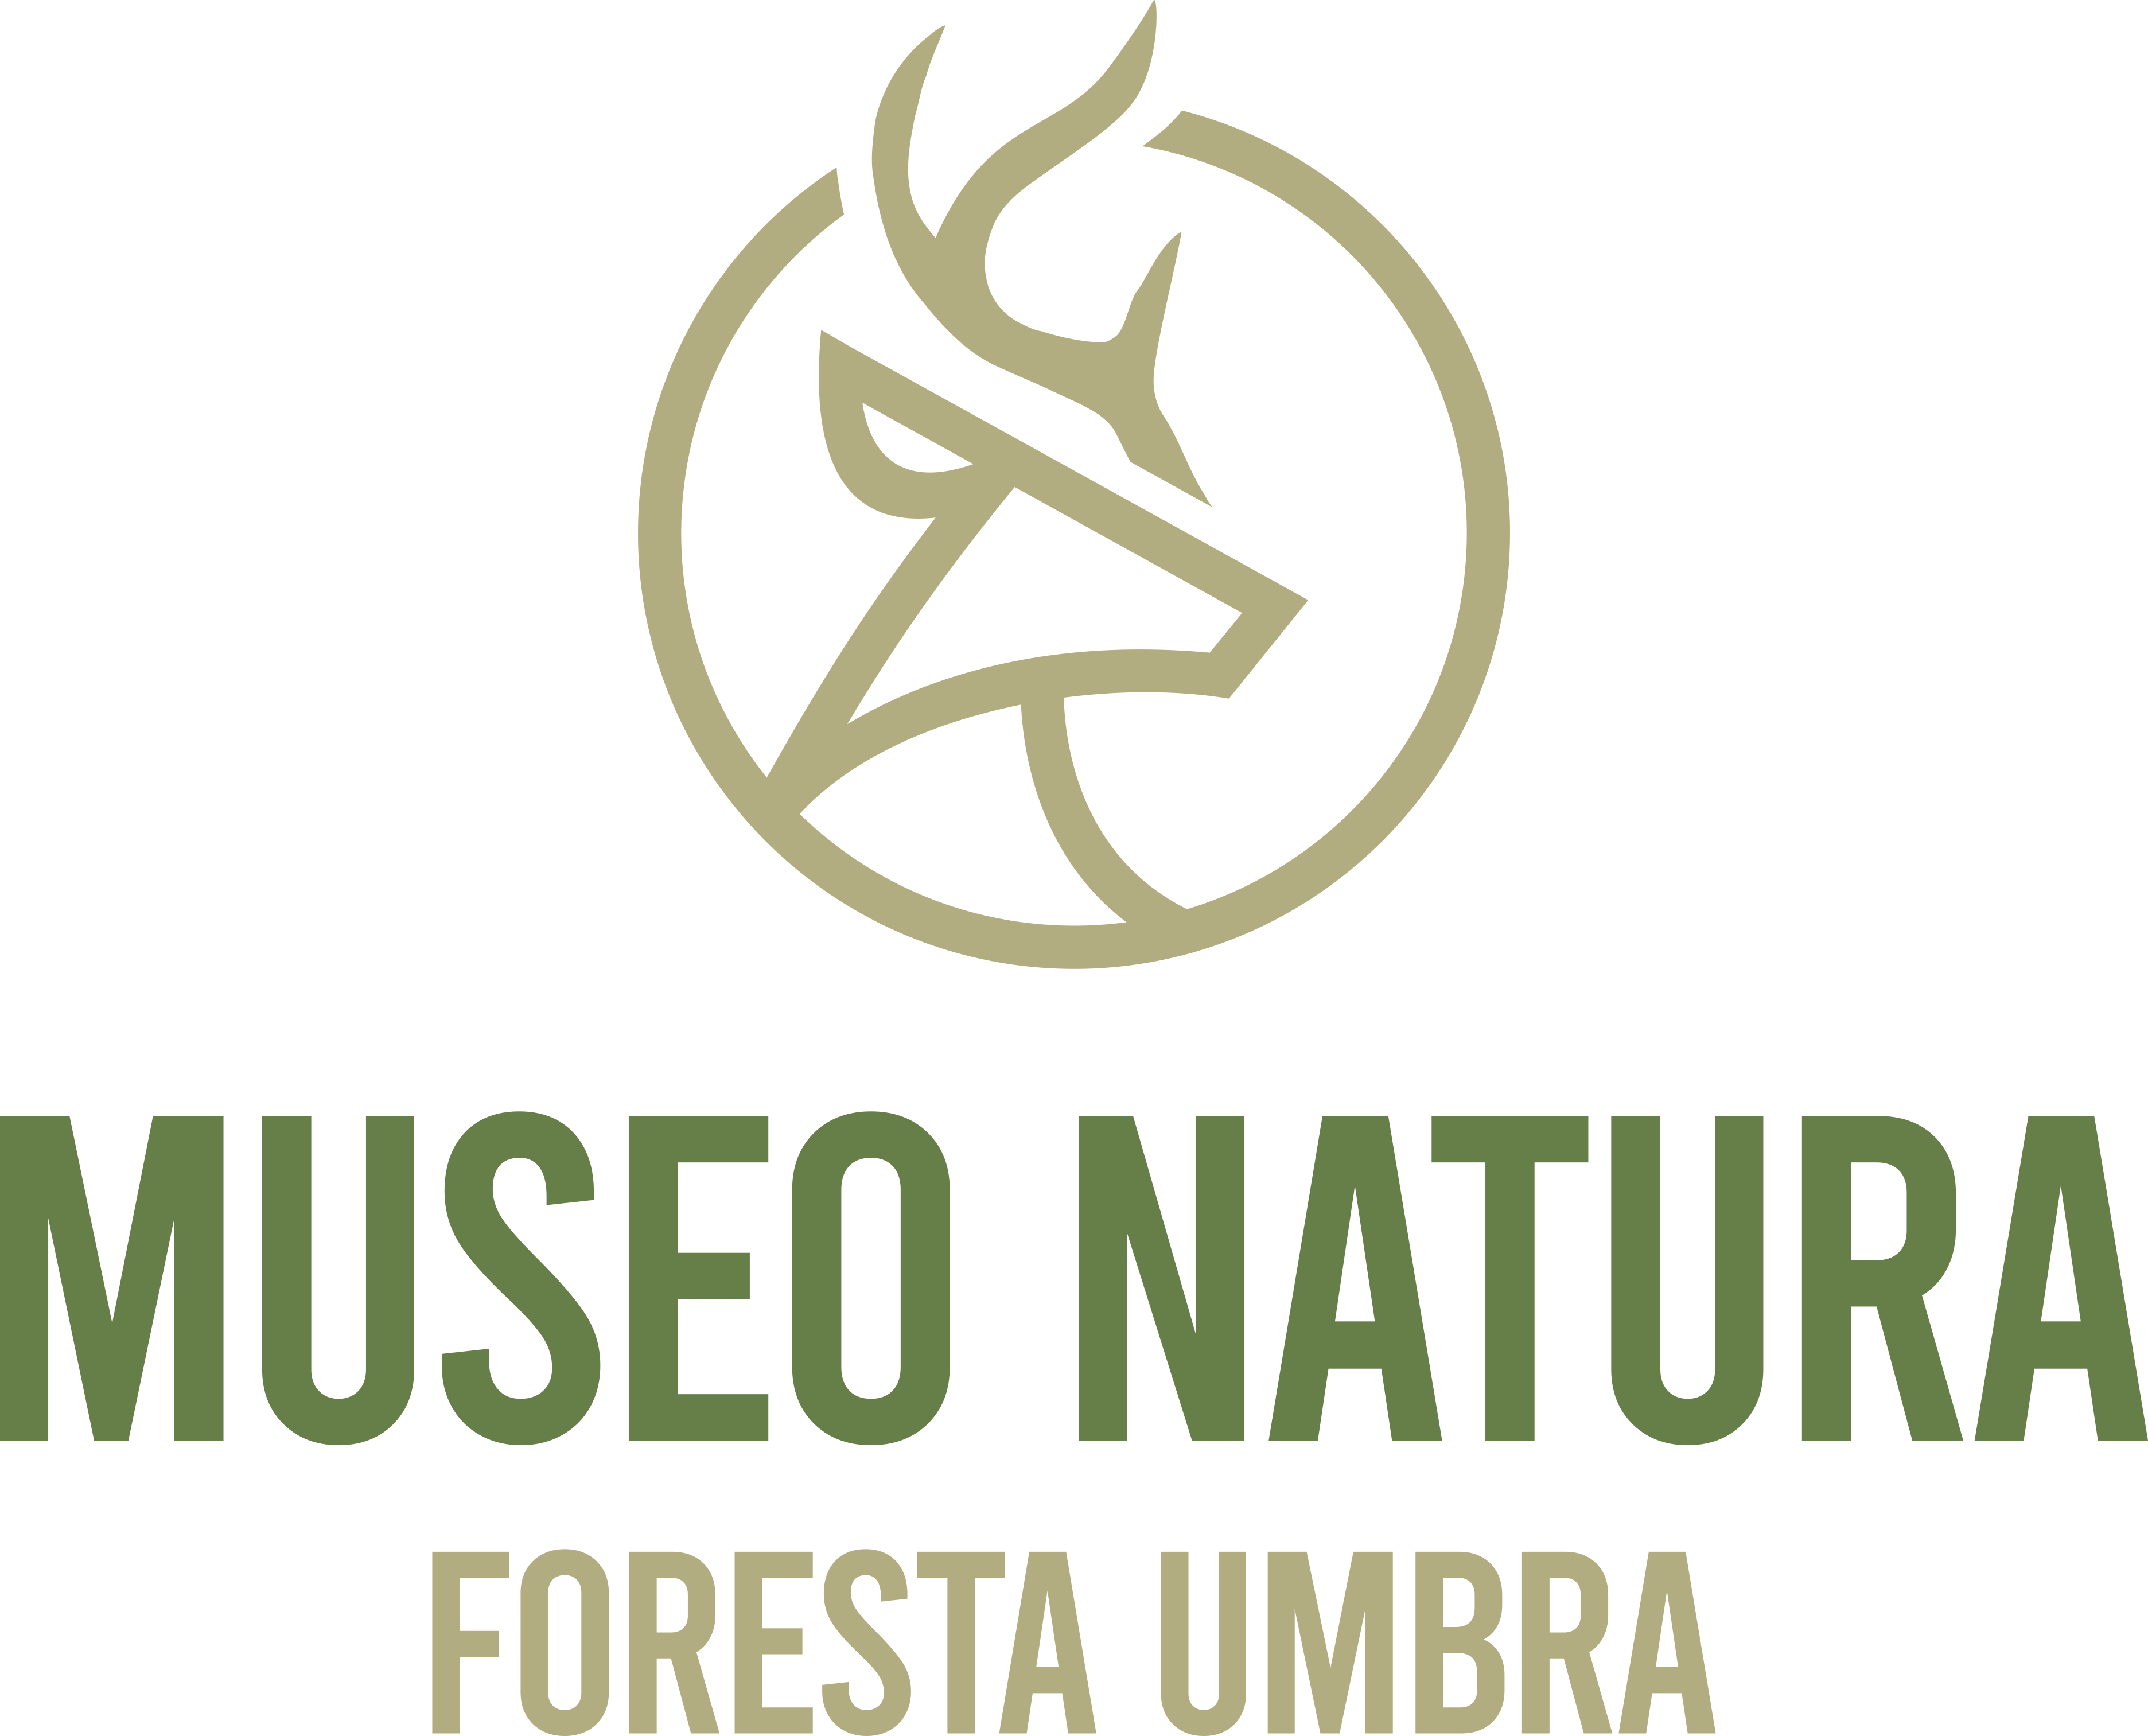 Umbrian Forest Museum